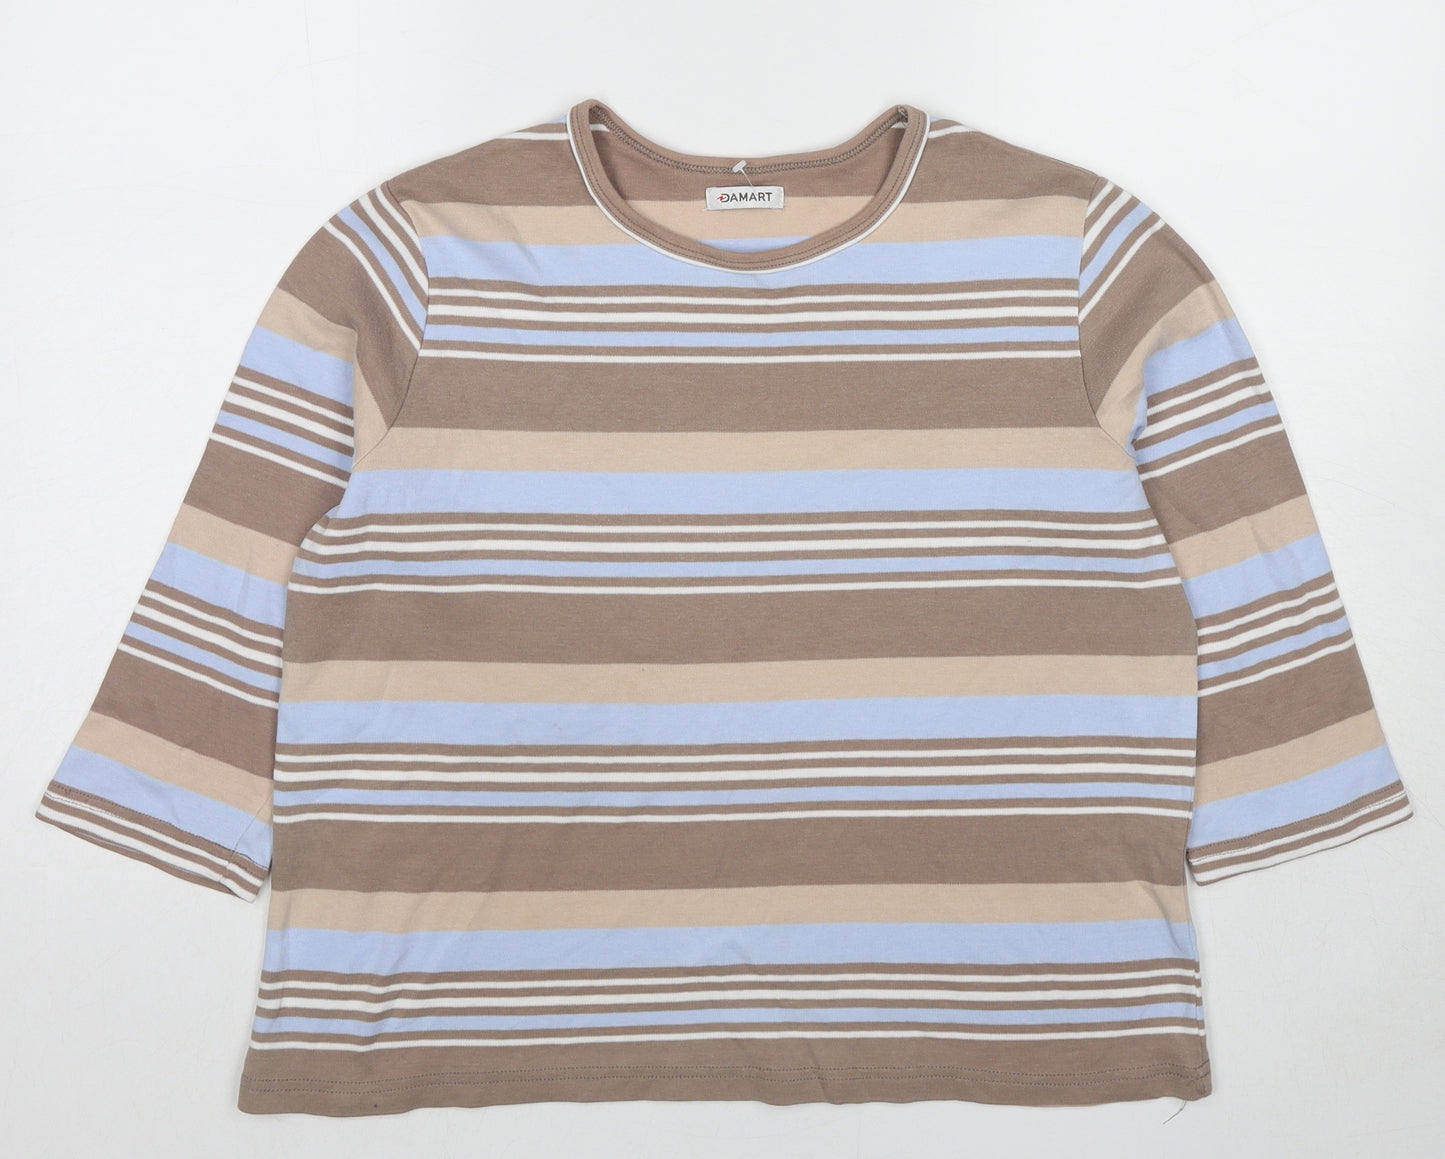 Damart Womens Multicoloured Striped Cotton Basic T-Shirt Size 14 Round Neck - Size 14-16